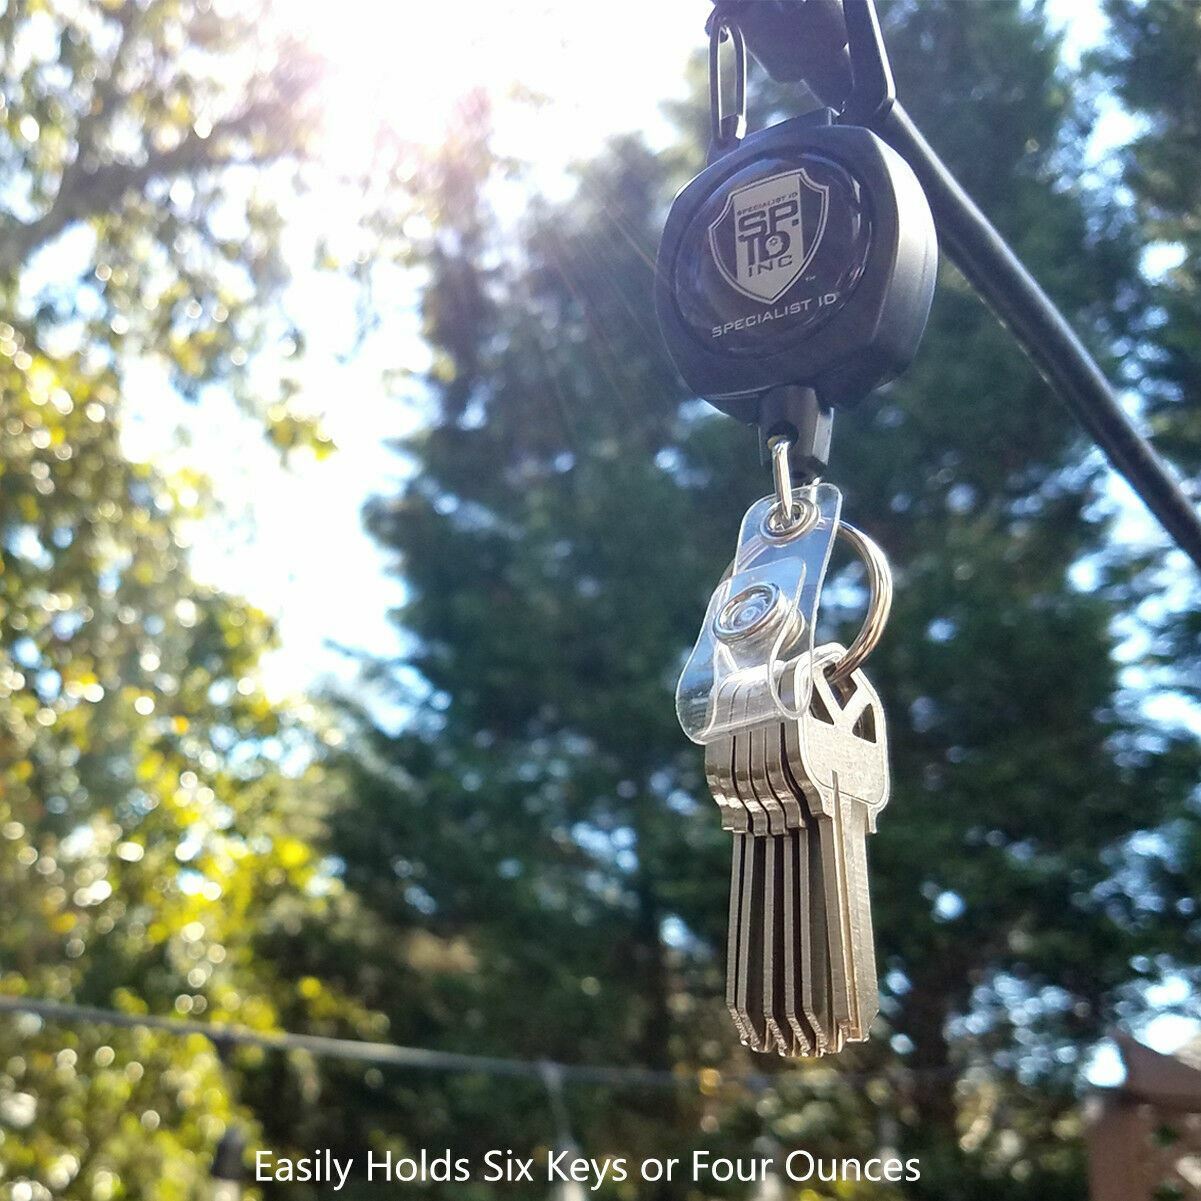 5 Heavy Duty Sidekick Badge Reels for Keys & Cards by Key Bak & Specialist ID Specialist ID SPID-3270 - фотография #6